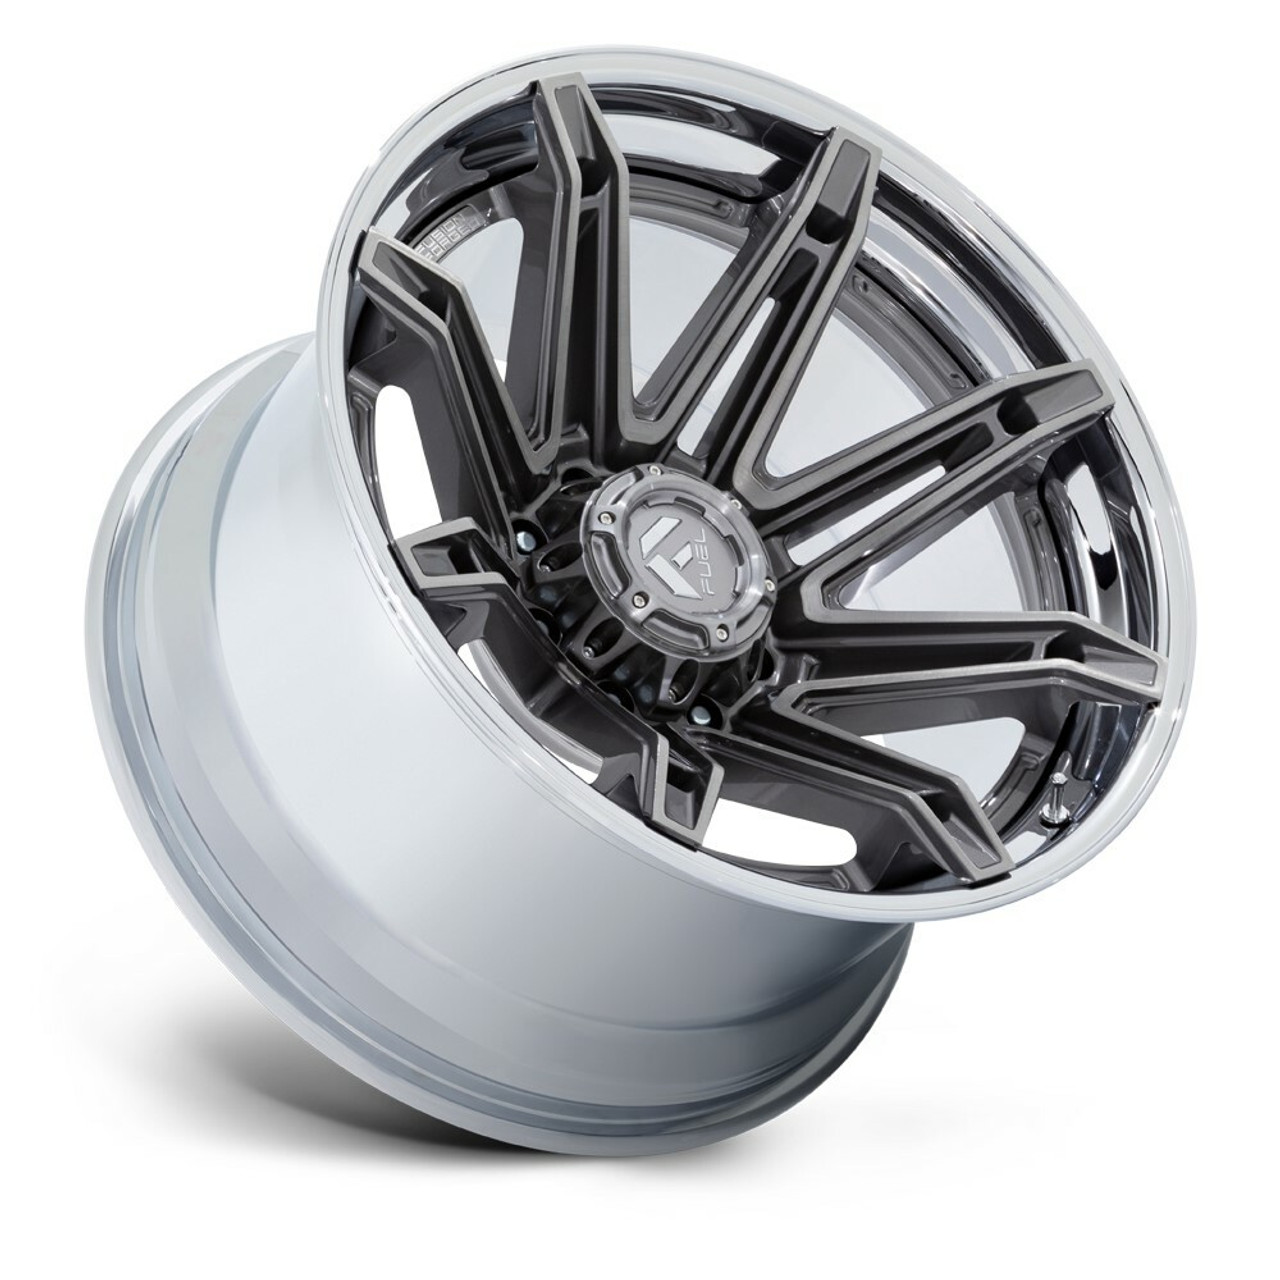 Set 4 Fuel FC401 Brawl 22x10 8x170 Platinum Chrome Lip Wheels 22" -18mm For Ford